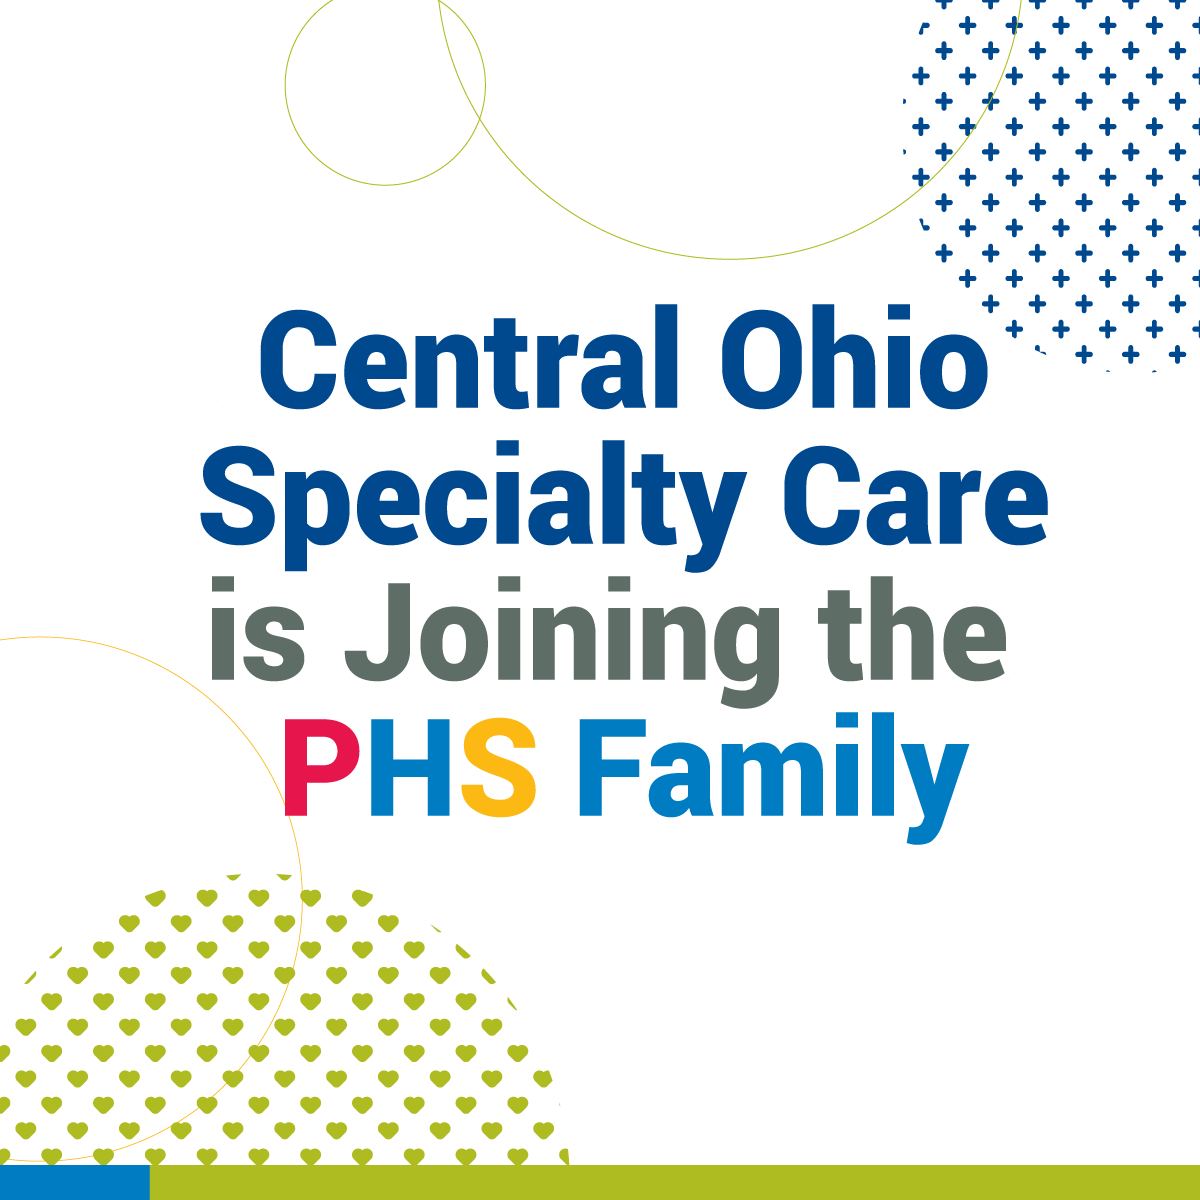 Pediatric Home Service Announces Partnership with Central Ohio